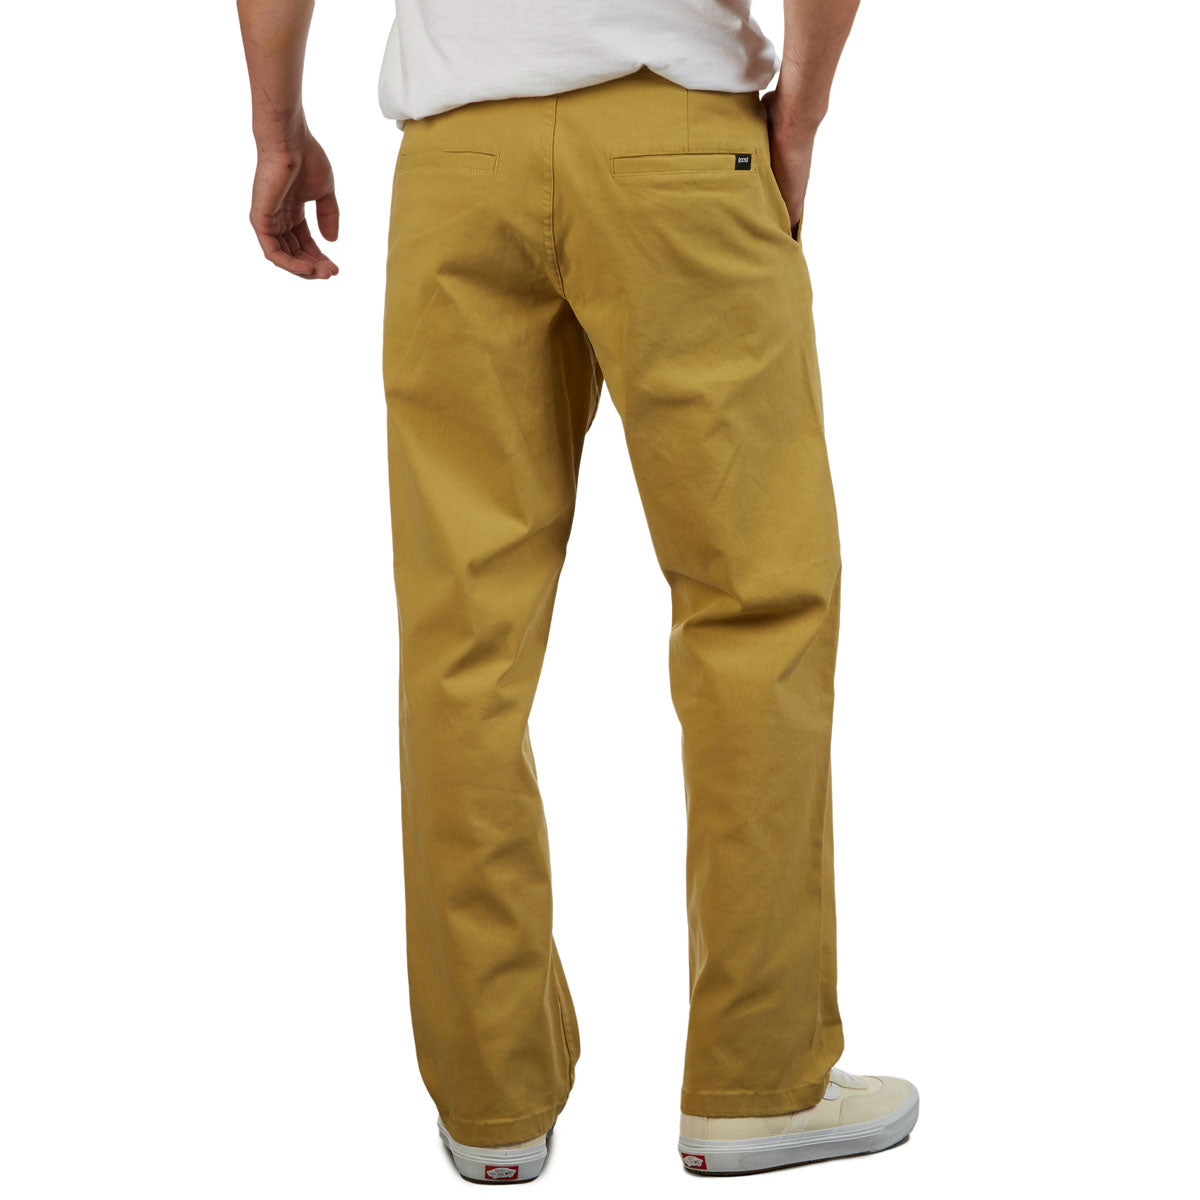 CCS Standard Plus Relaxed Chino Pants - Dark Mustard image 3